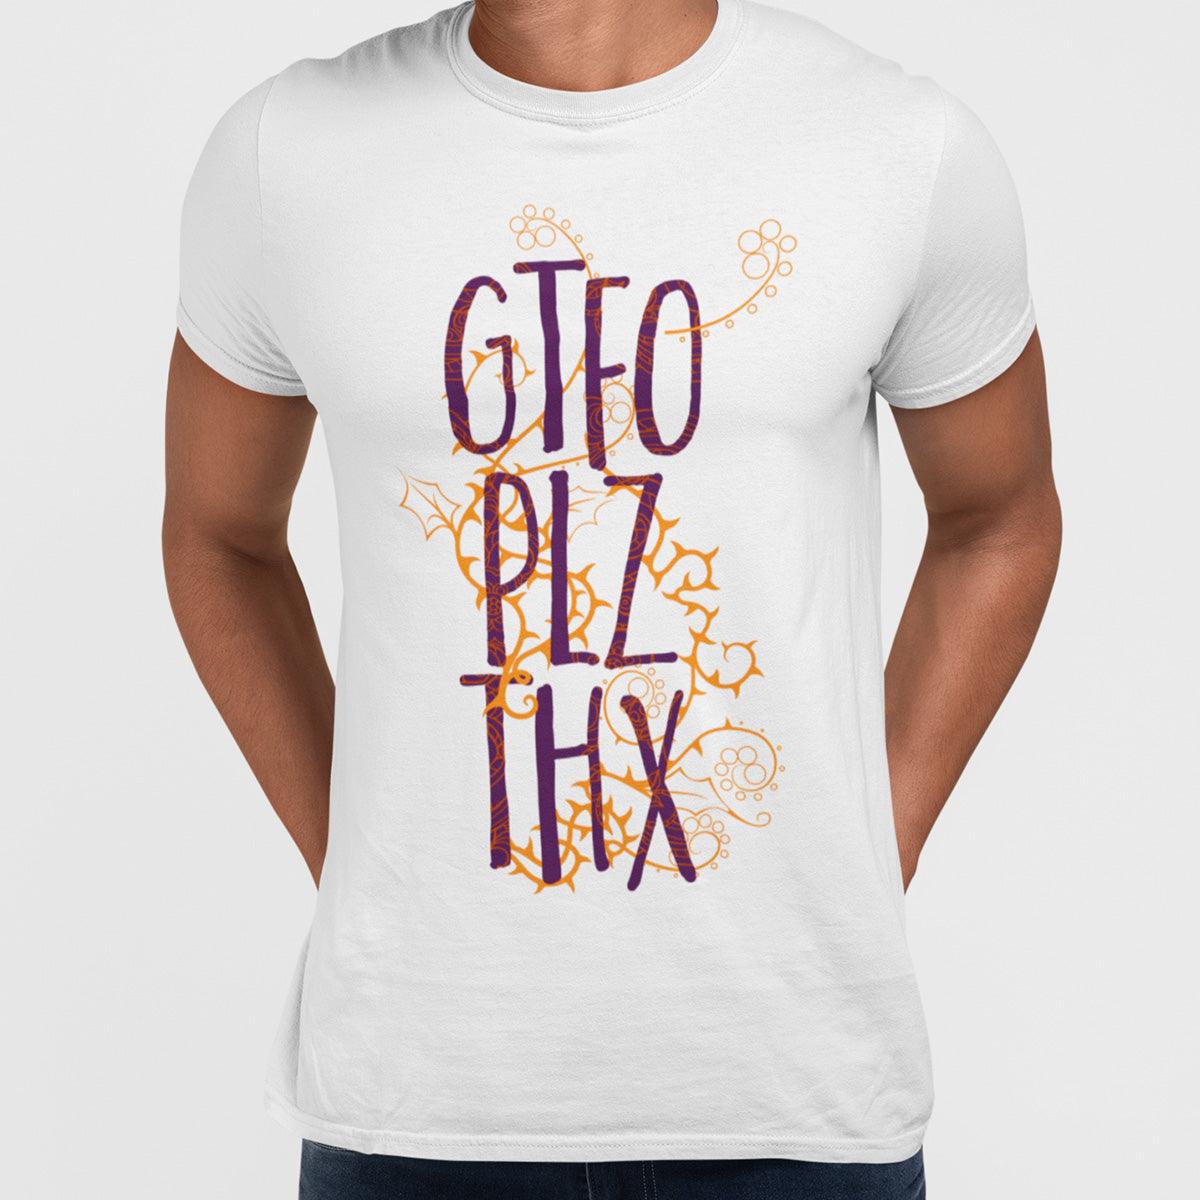 GTFO PLZ THX Typography T-Shirt - Kuzi Tees